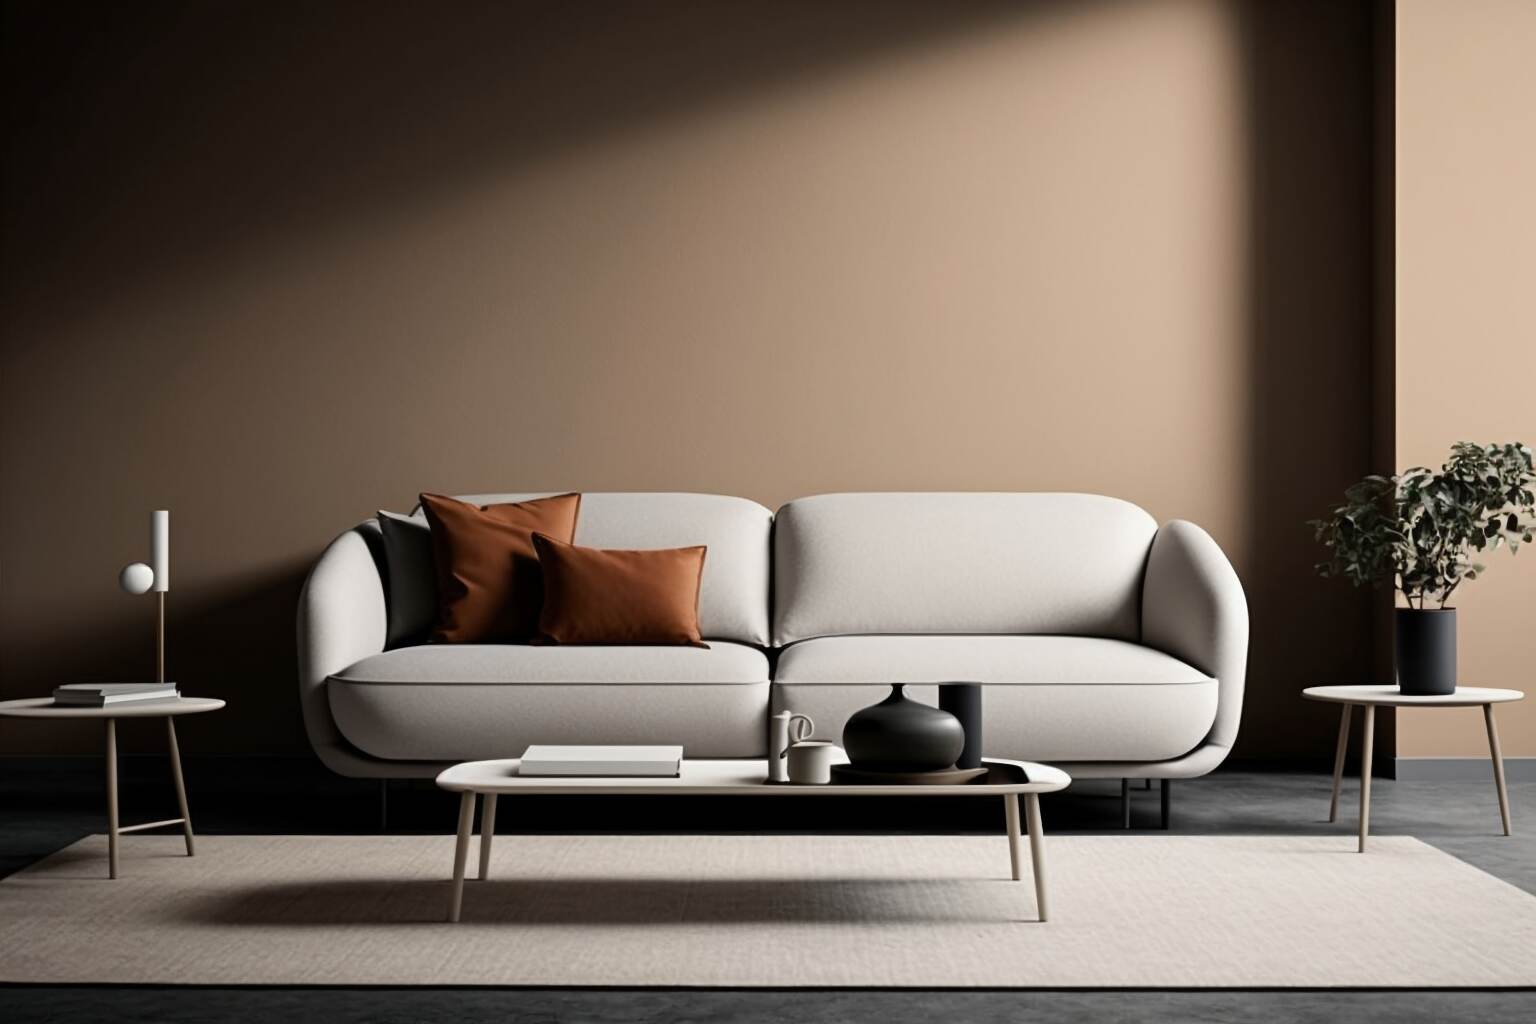 Living Room With A Sleek And Minimalist Sofa